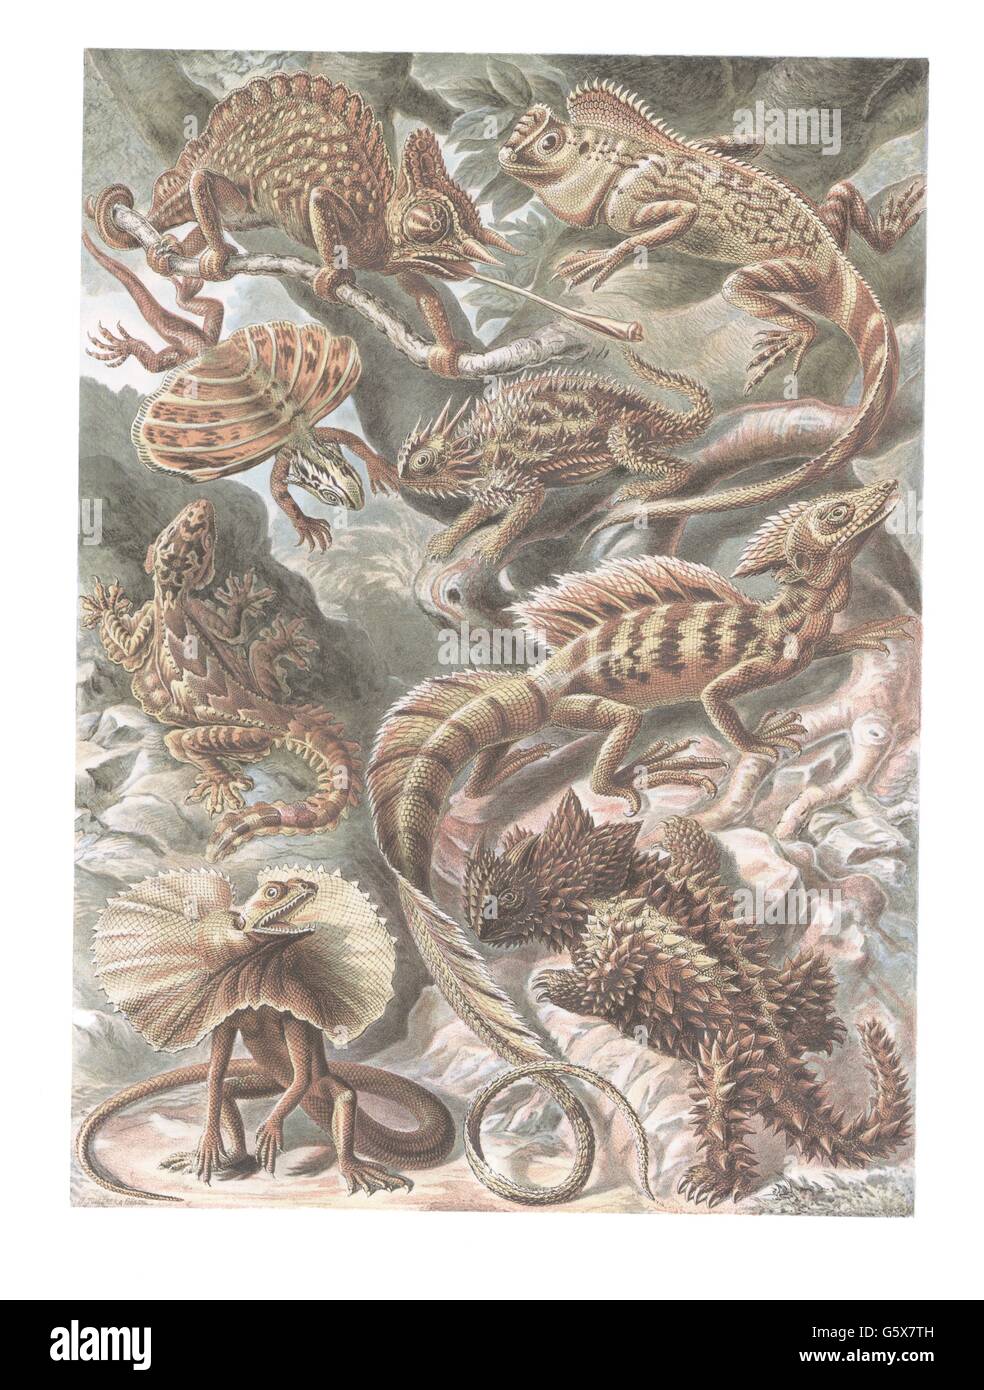 zoologie / Tiere, Reptilien, Eidechsen (Lacertidae), Farblithographie, aus: Ernst Haeckel, 'Kunstformen der Natur', Leipzig - Wien, 1899 - 1904, Additional-Rights-Clearences-not available Stockfoto